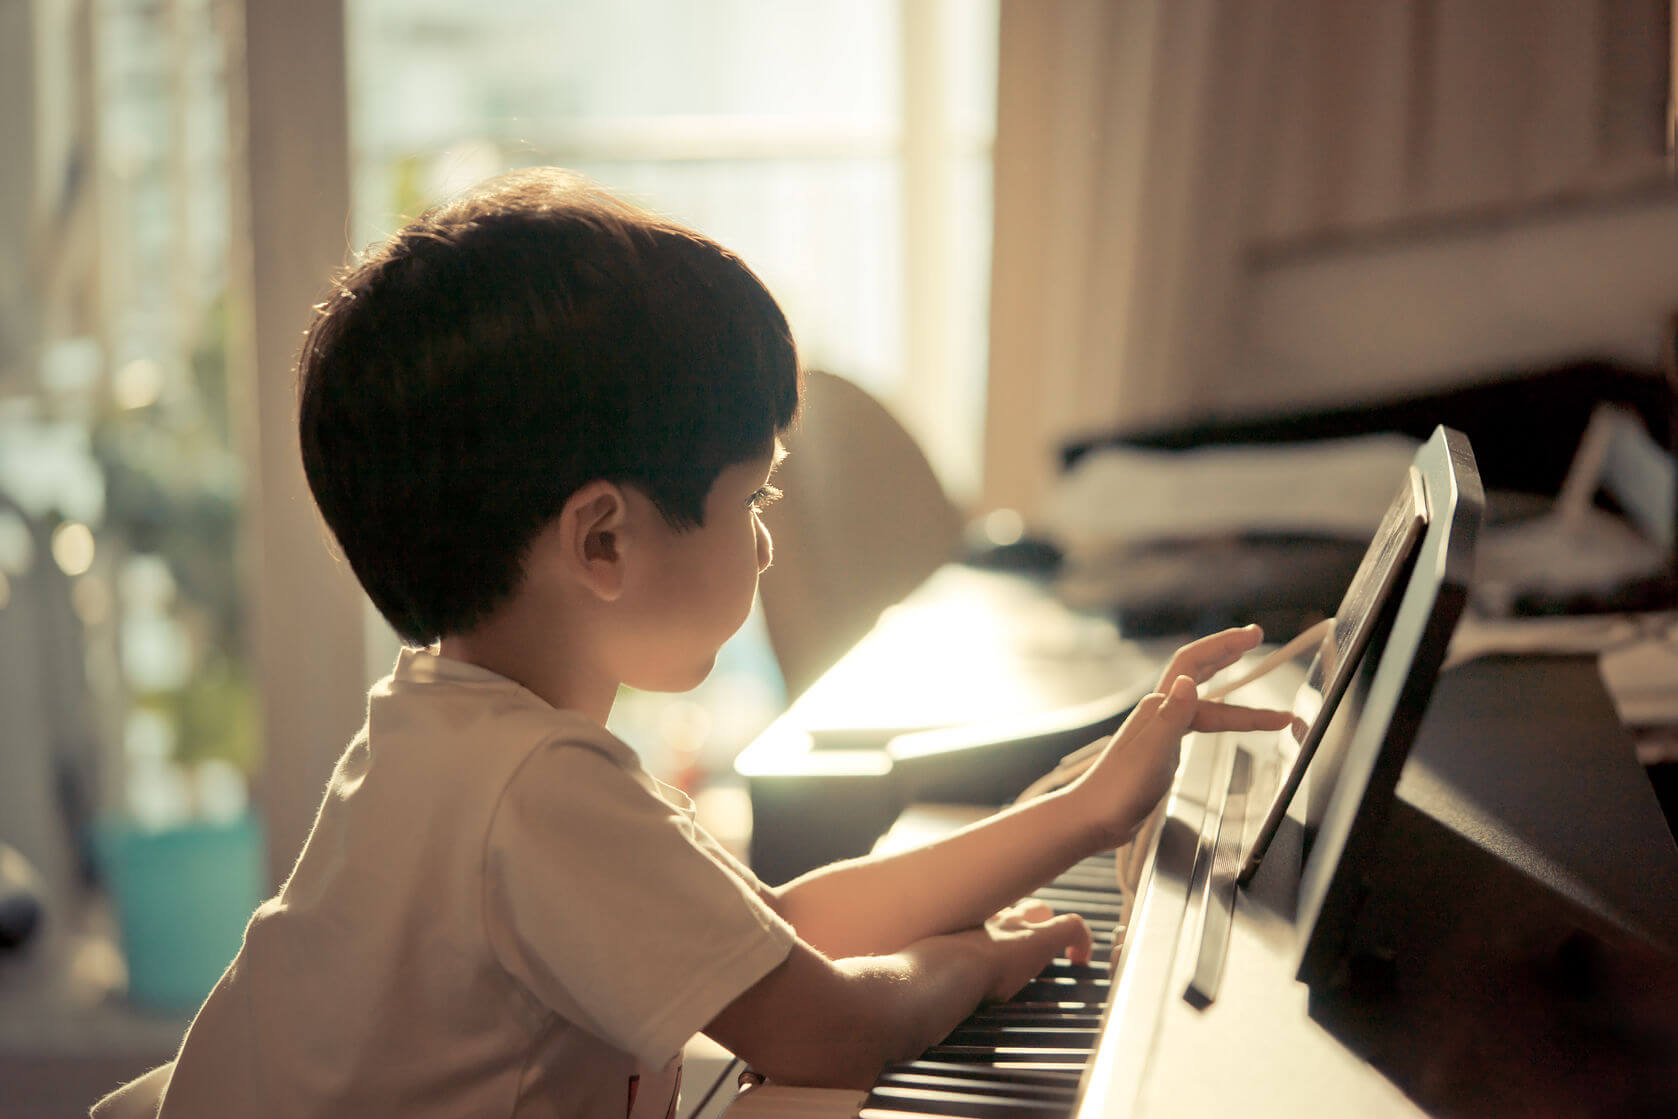 Stimulate Child brain development through music